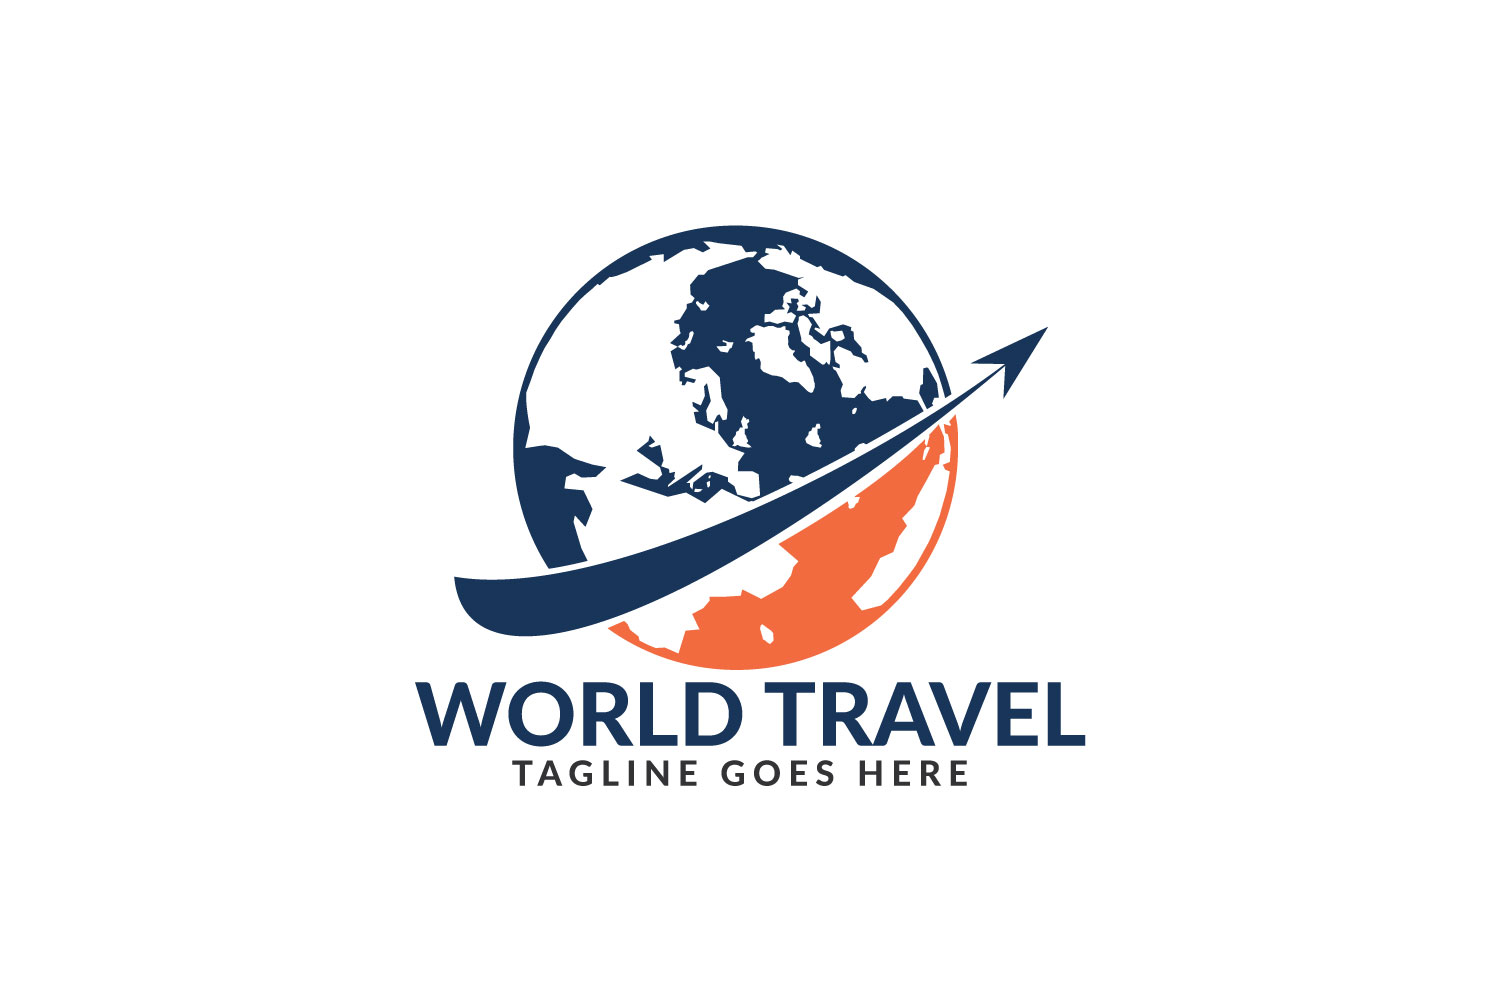 World Travel logo design. Travel agency and company logo.